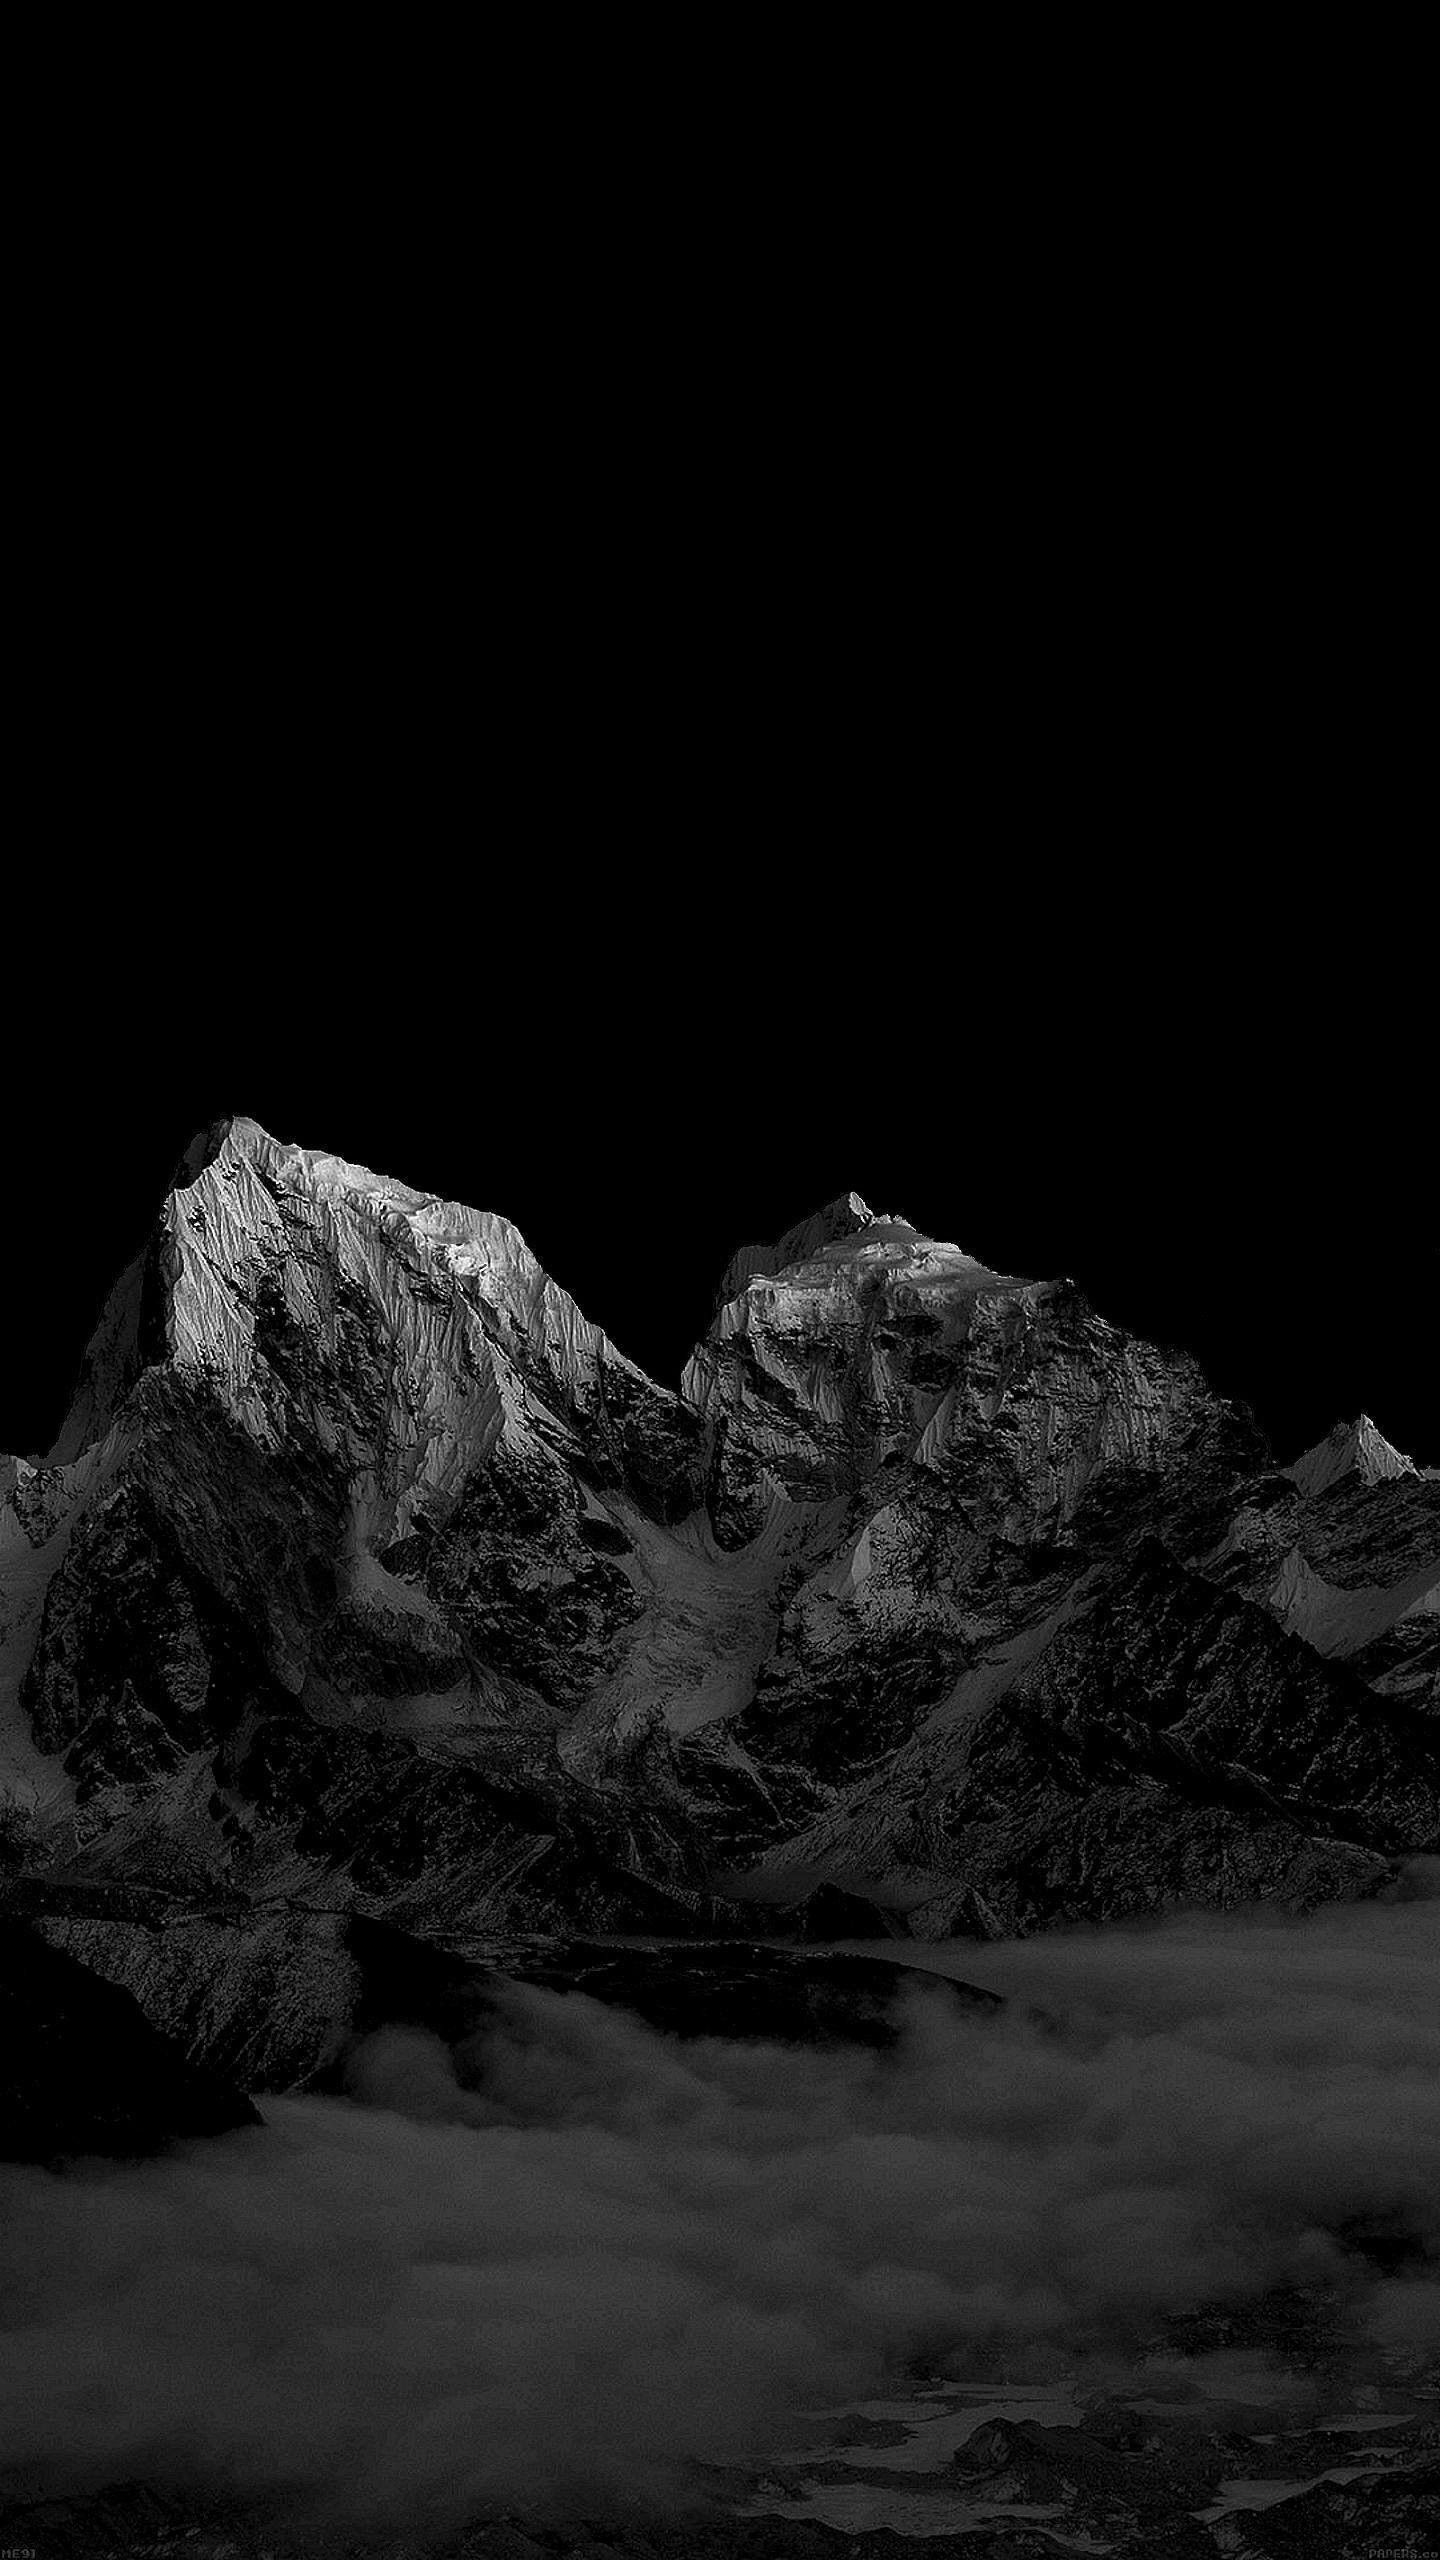 1440x Amoled Pure Black Mountains Data Id 206243 iPhone